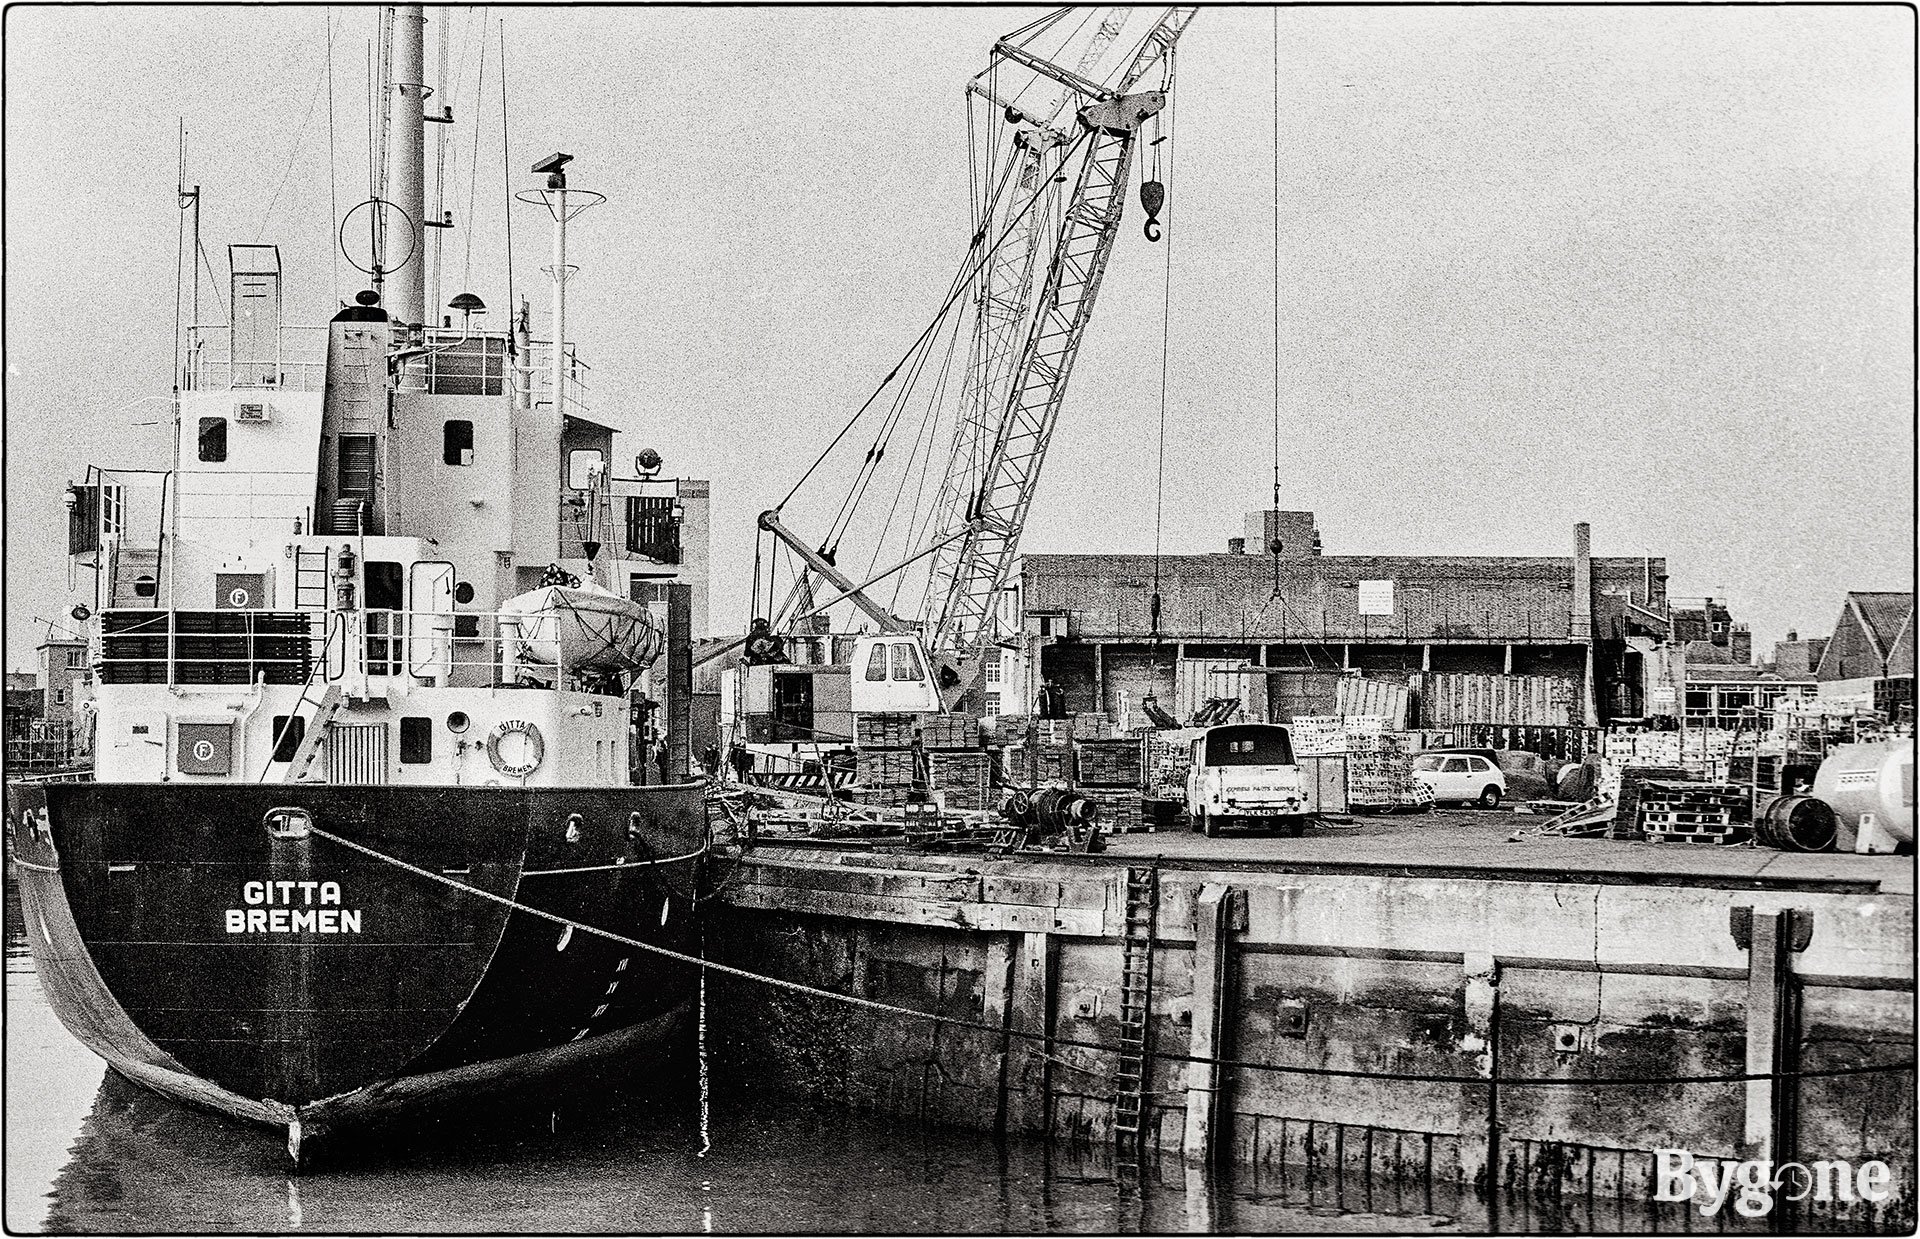 Gitta Bremen Ship, Old Portsmouth